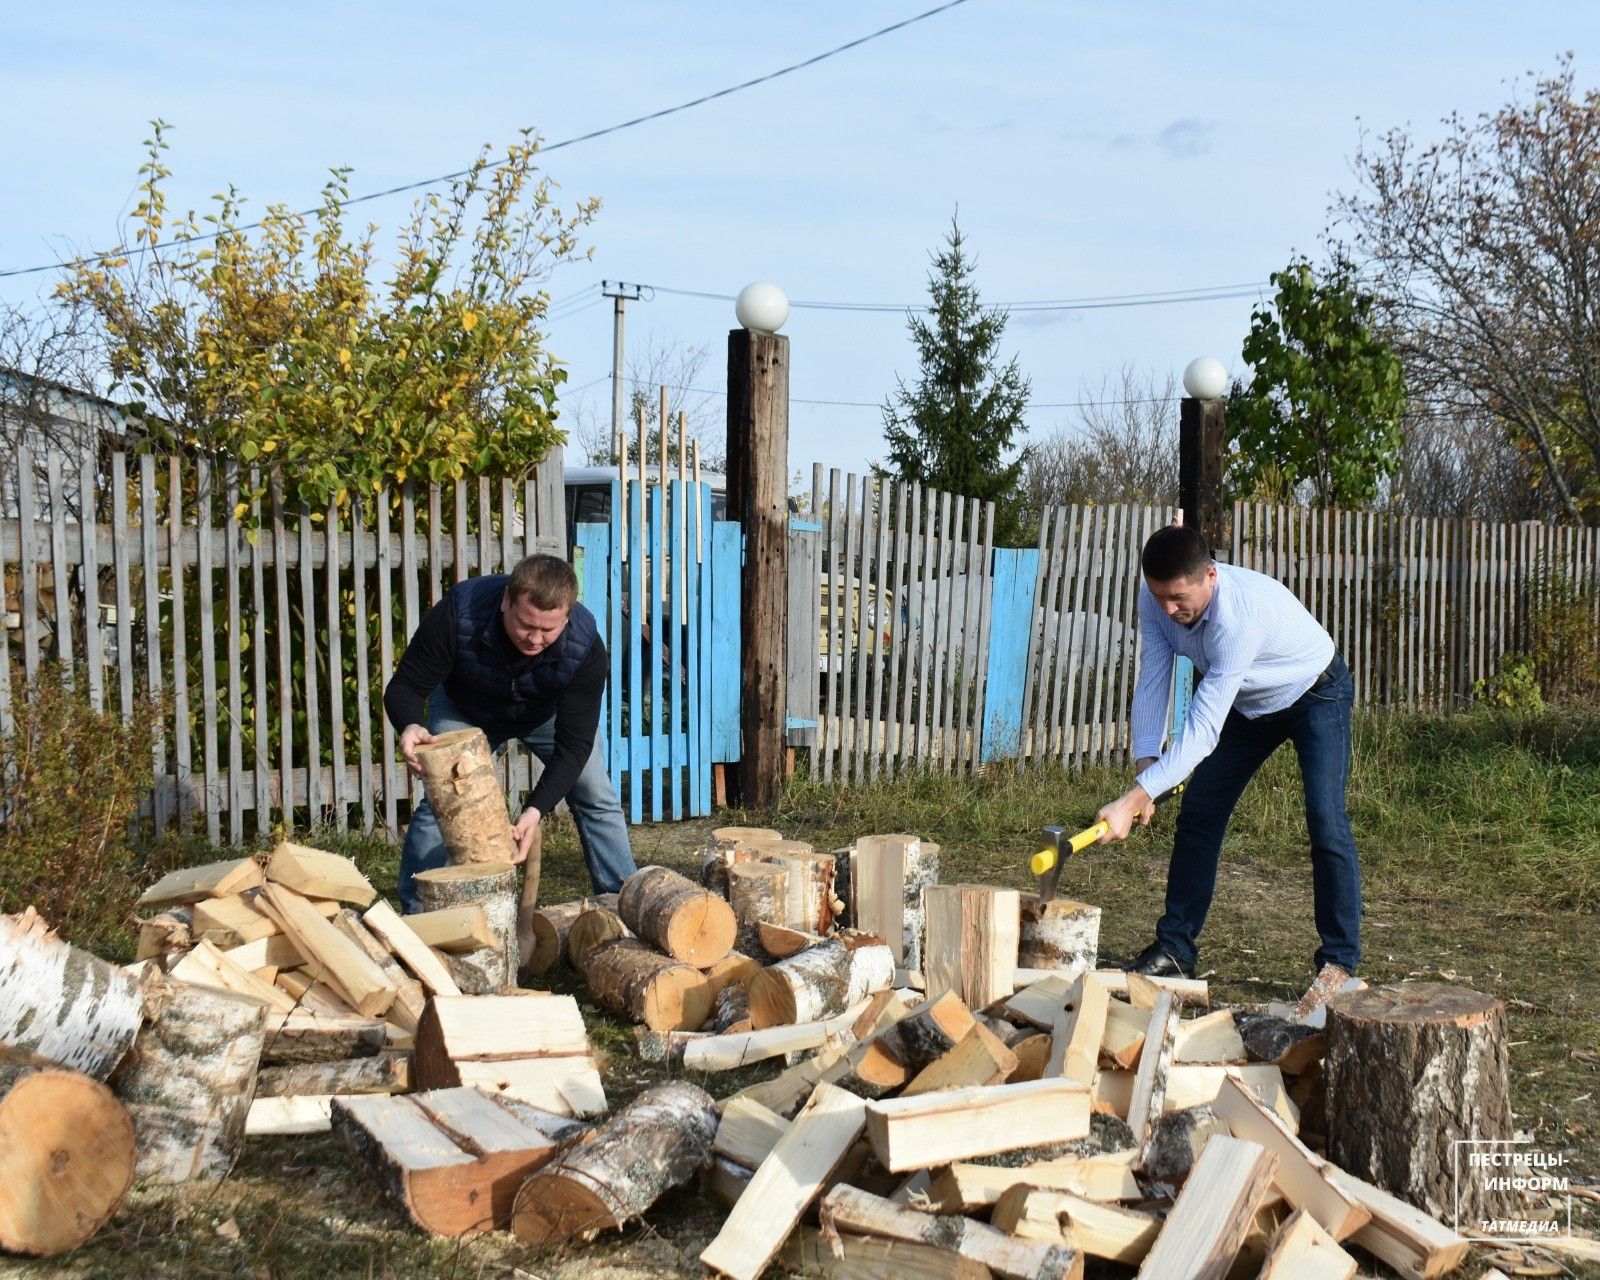 Глава Пестречинского района наколол дрова жене служащего на СВО